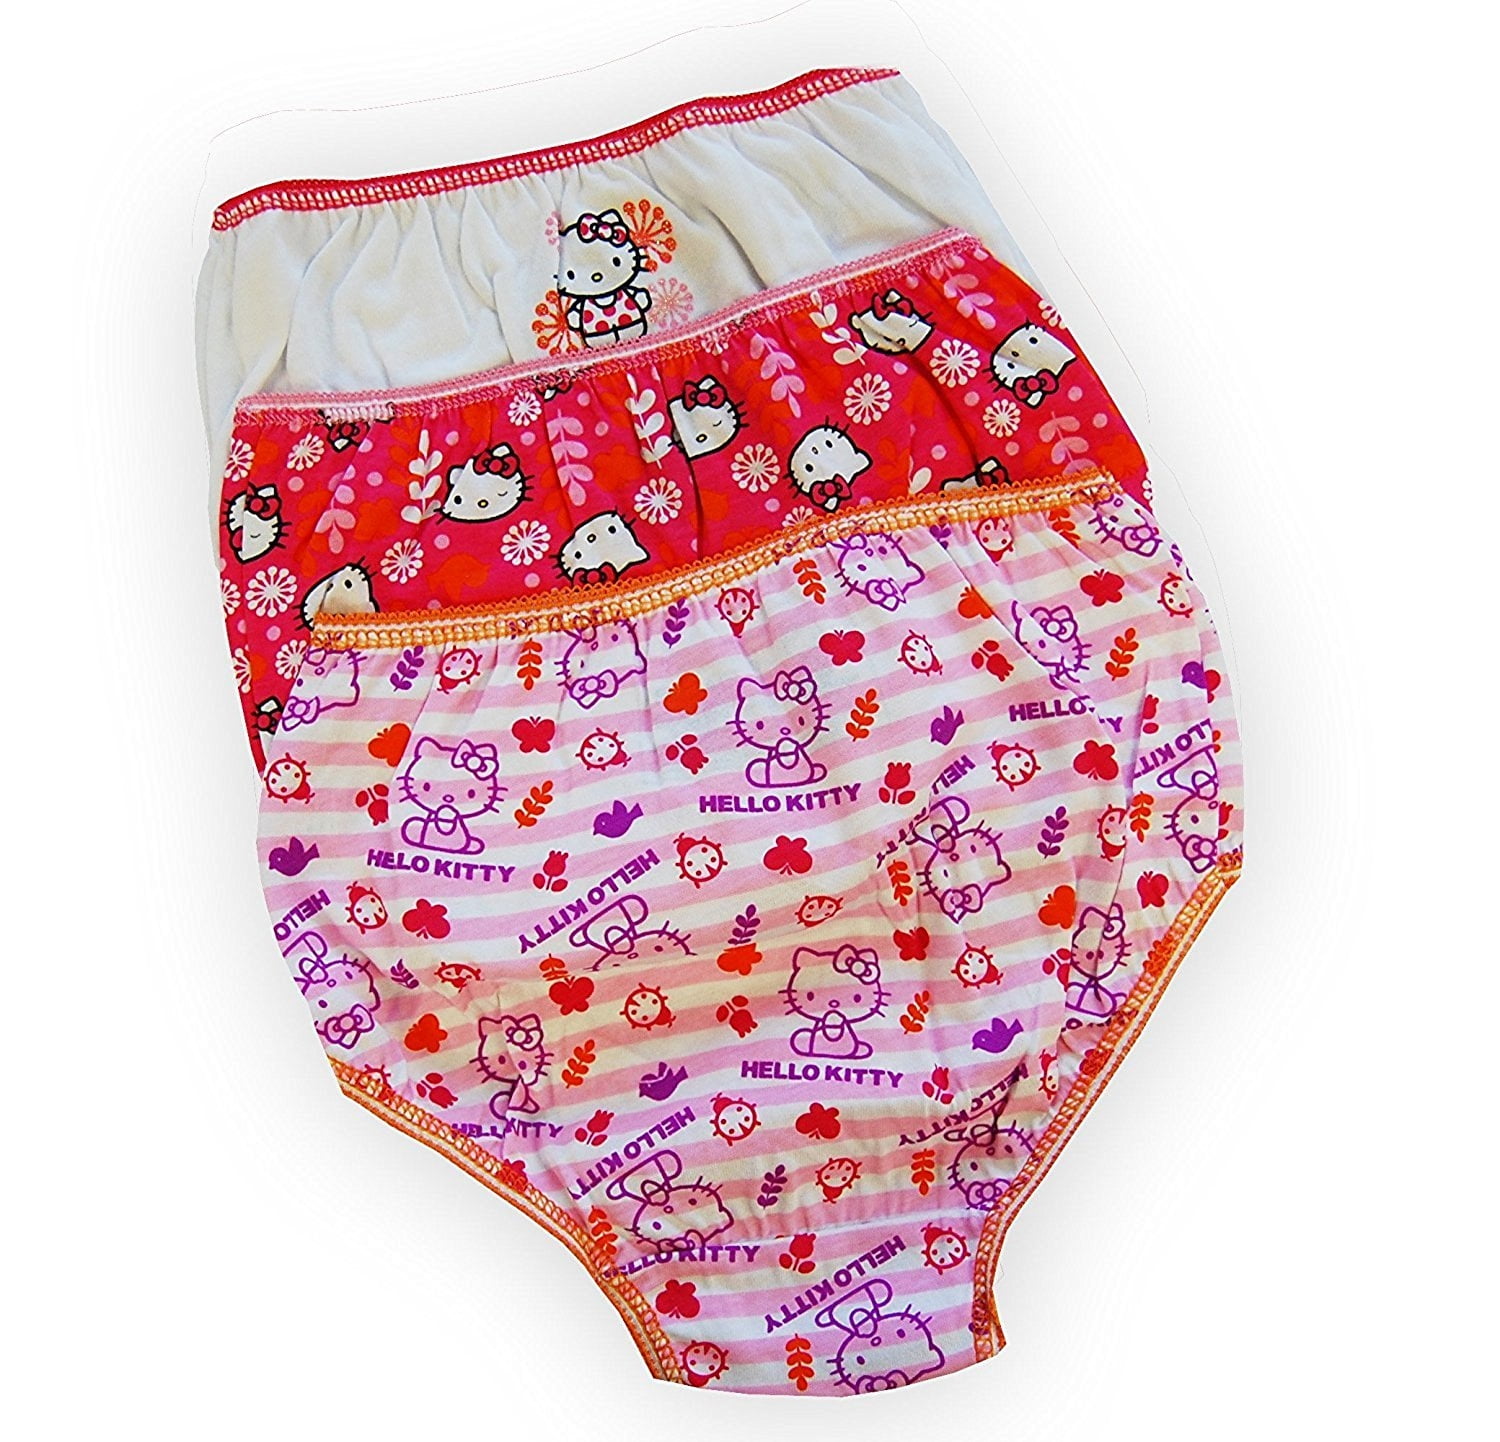  Hello  Kitty  Hello  Kitty  Girls Underwear Panty by Hanes 